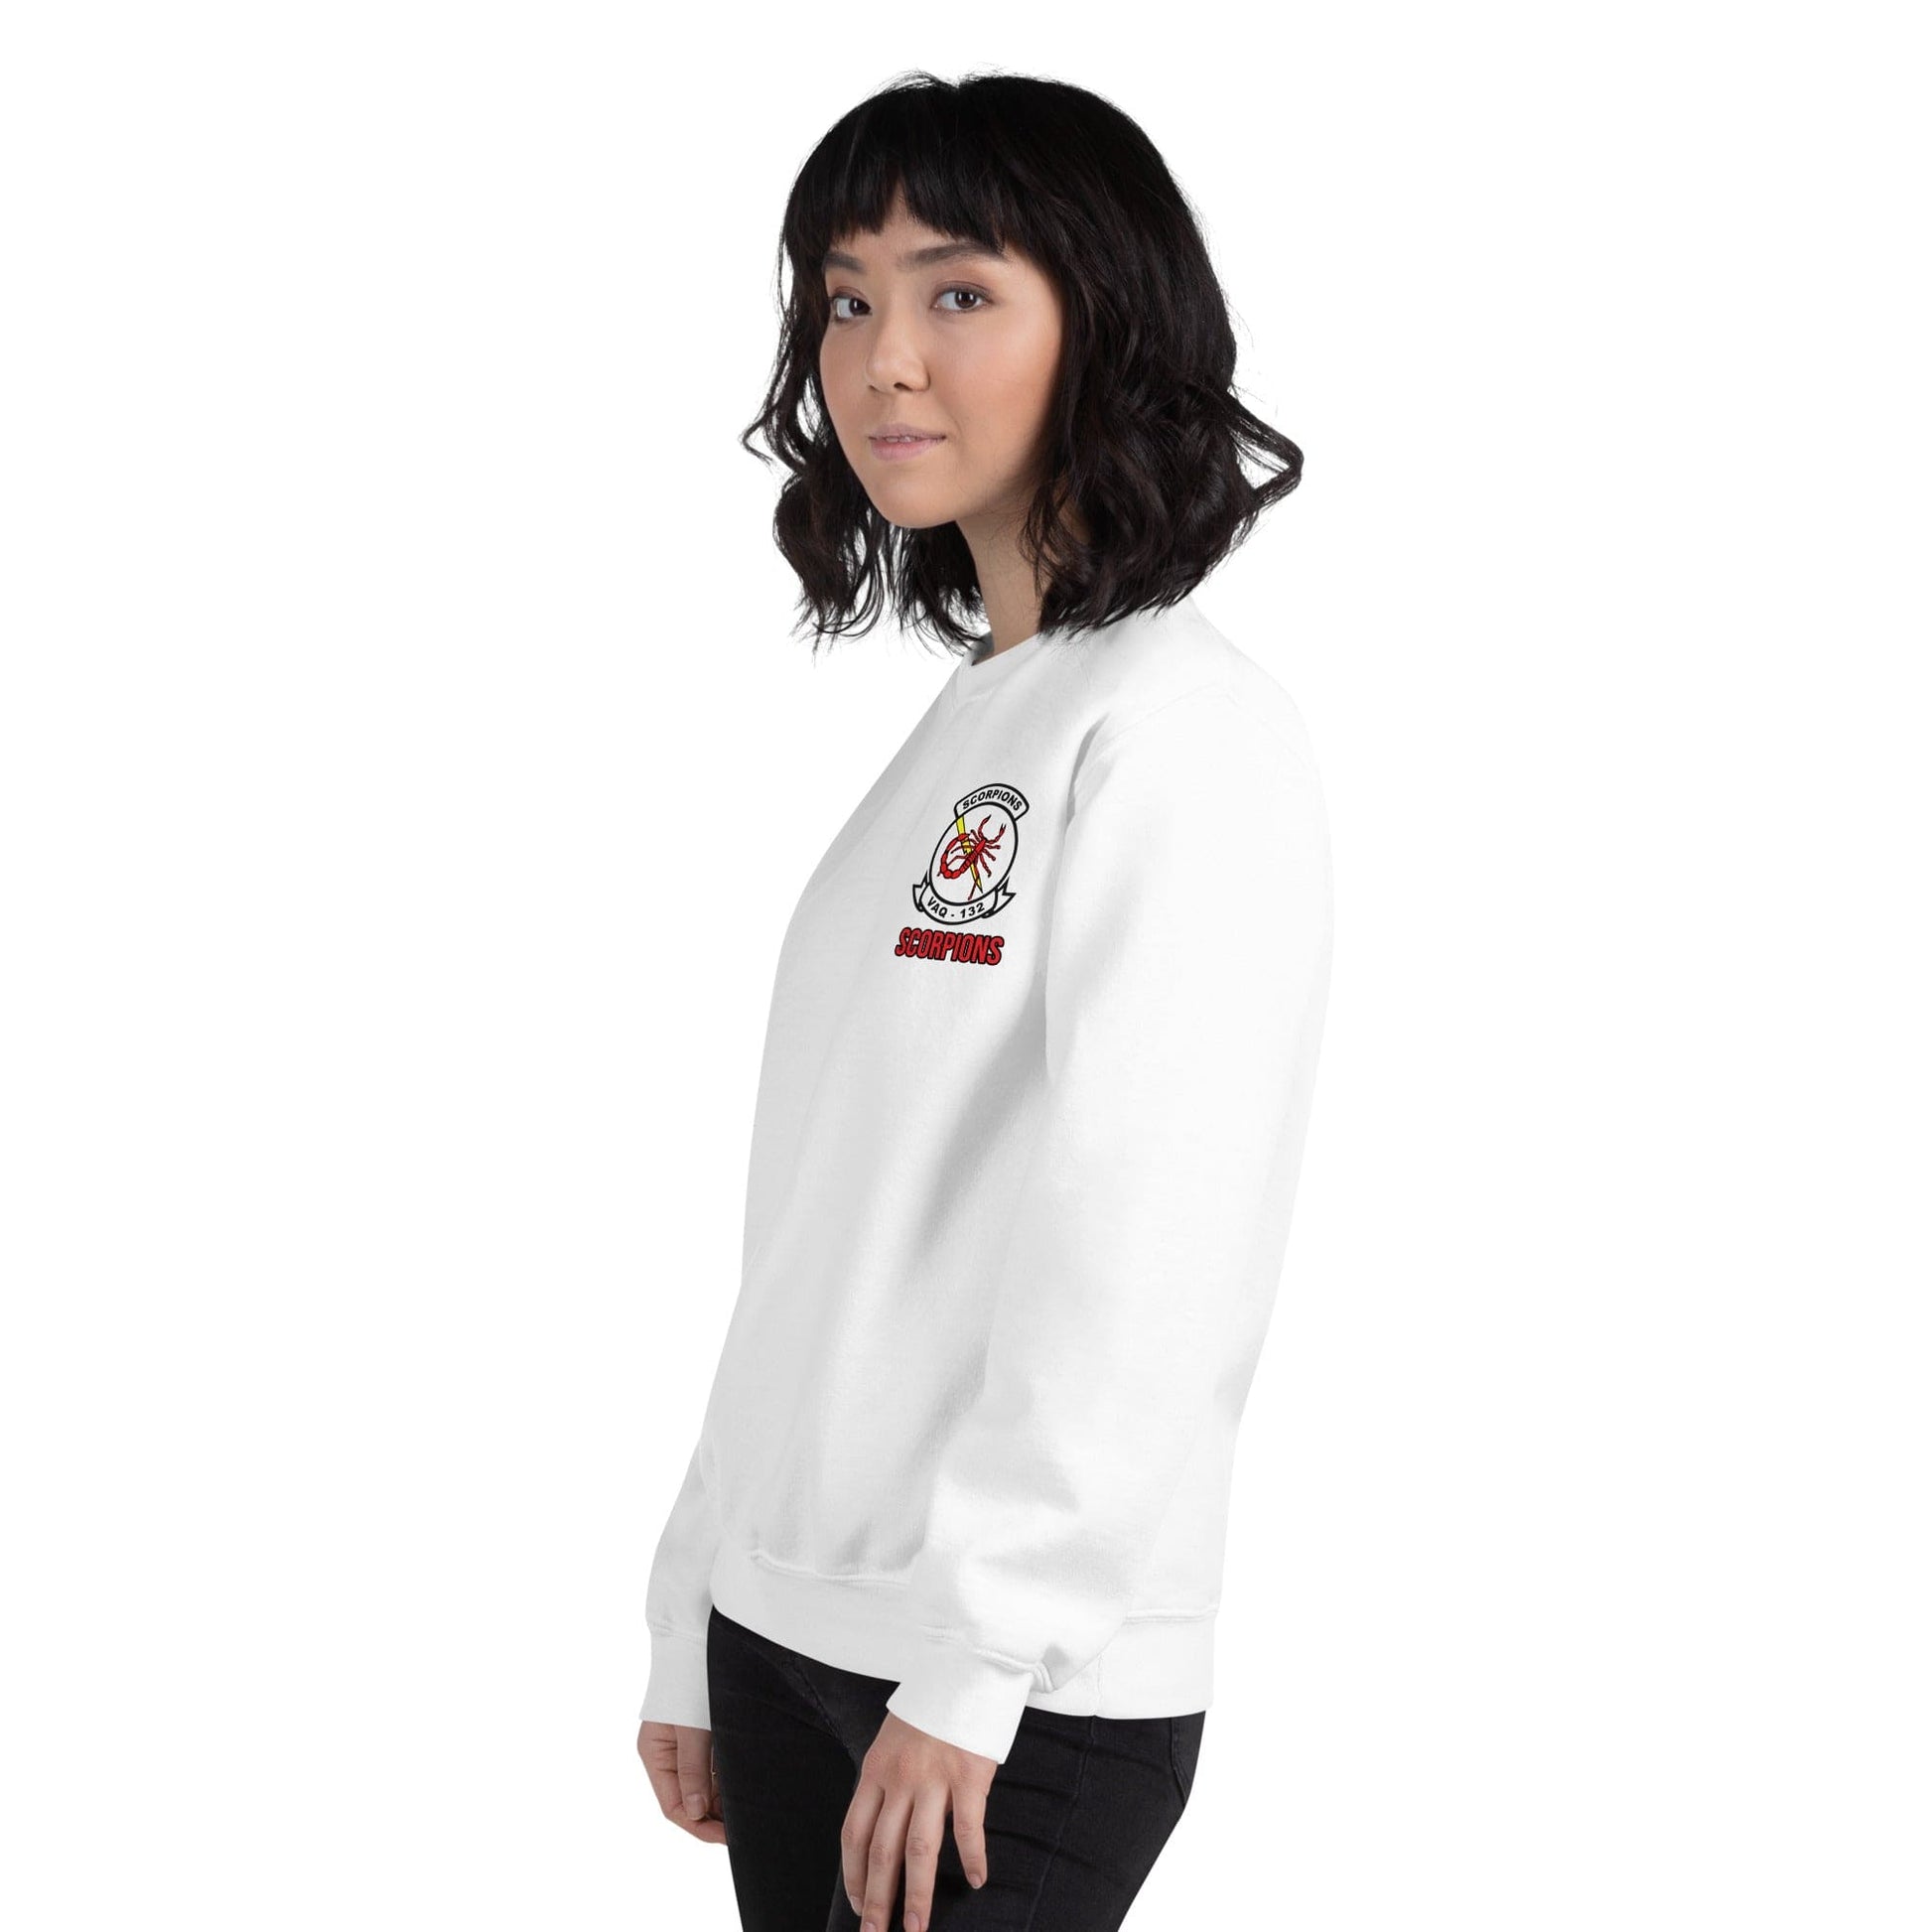 VAQ-132 "Scorpions" Women's Sweatshirt